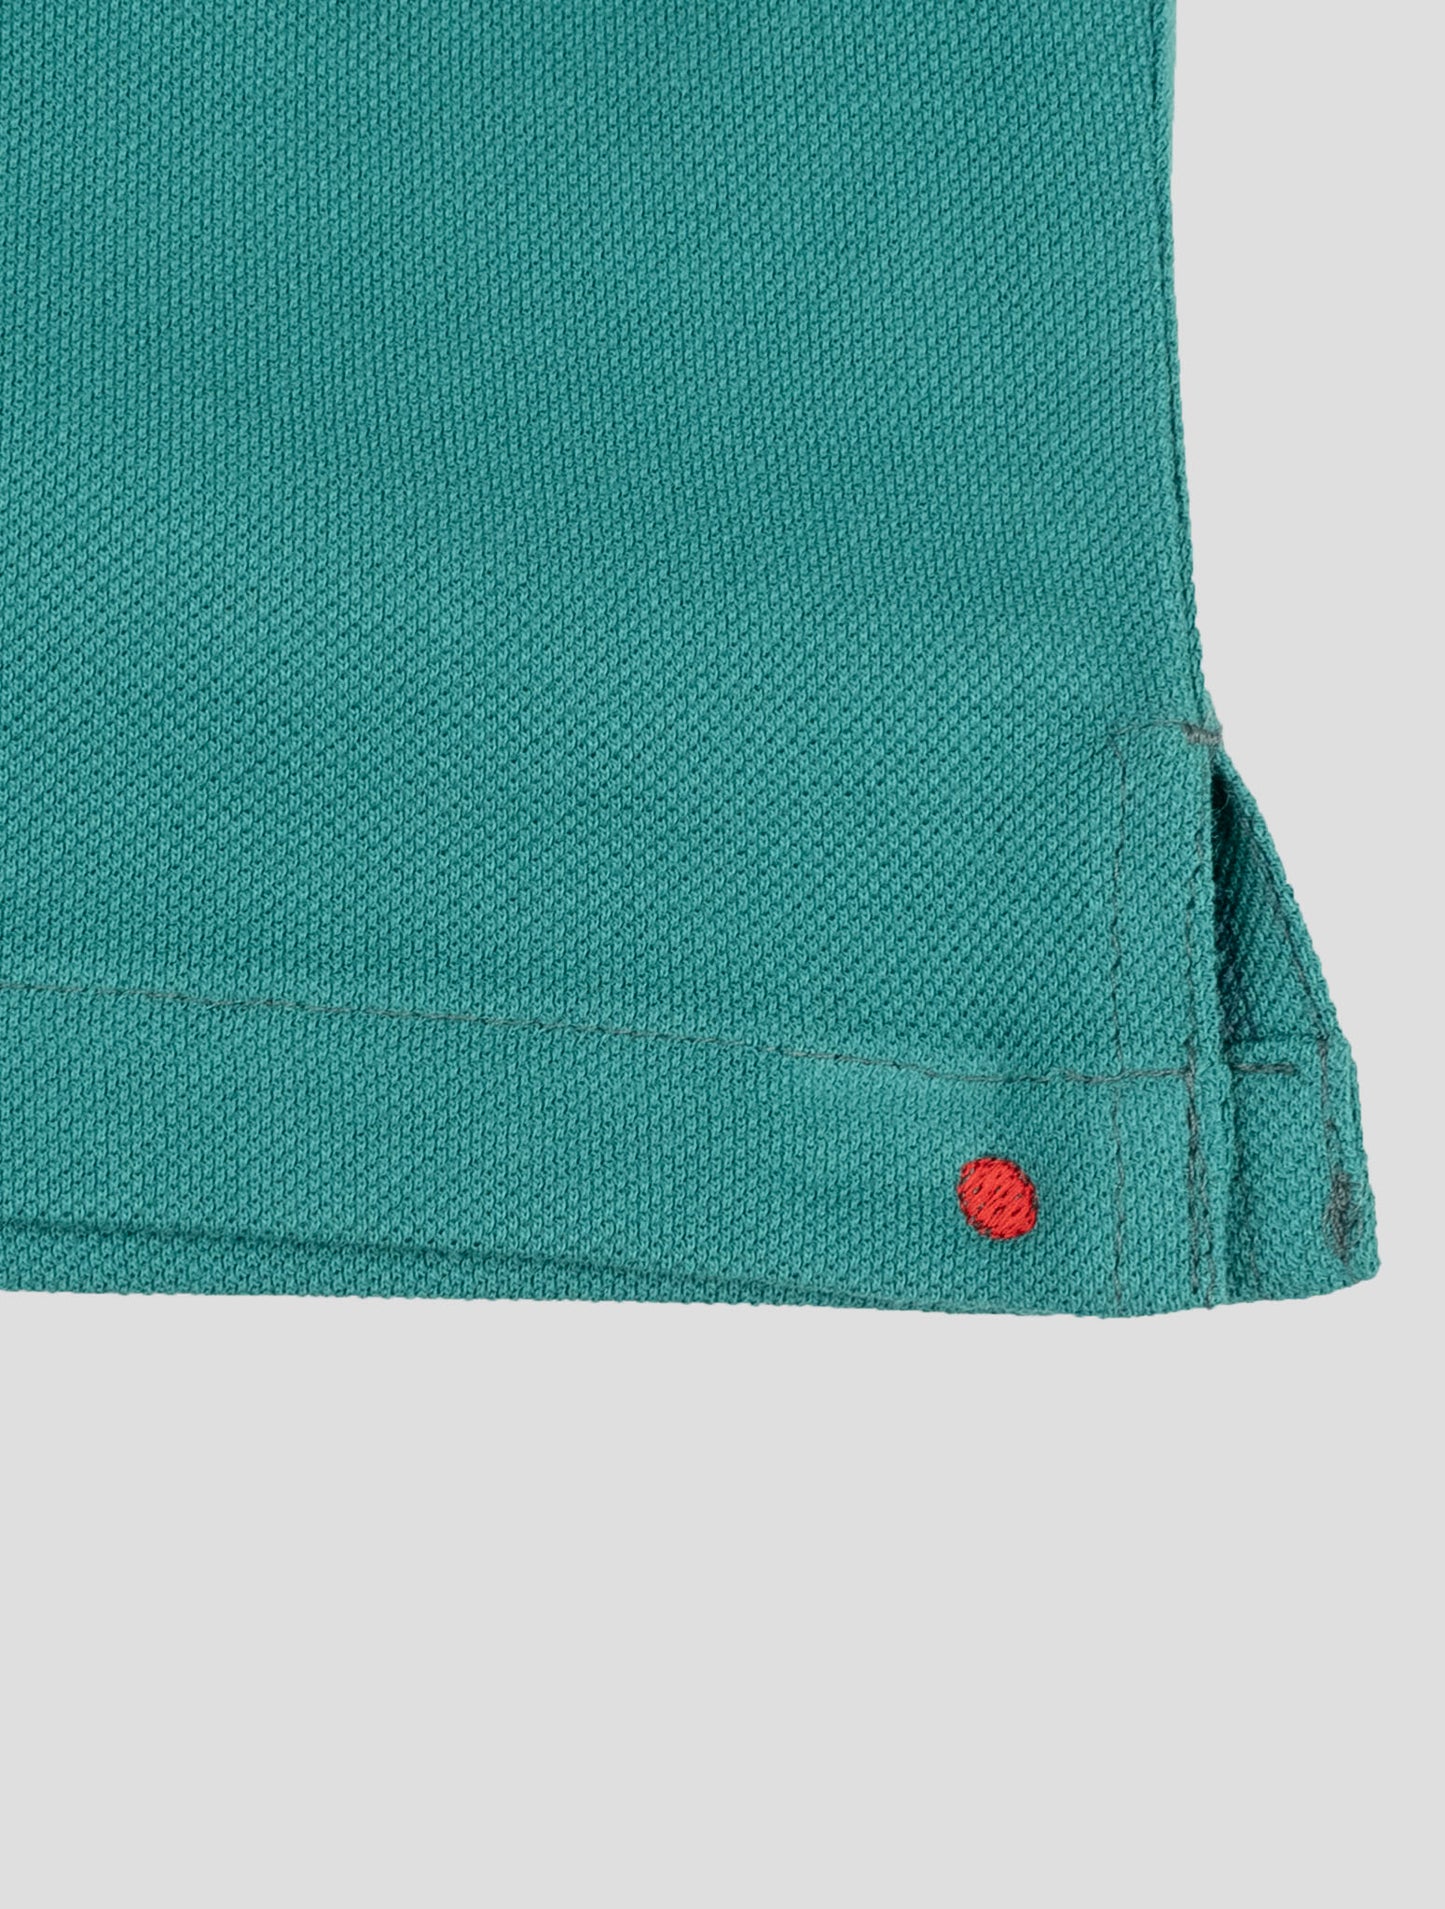 Kiton Matching Outfit - Gray Mariano and Green Short Pants Tracksuit